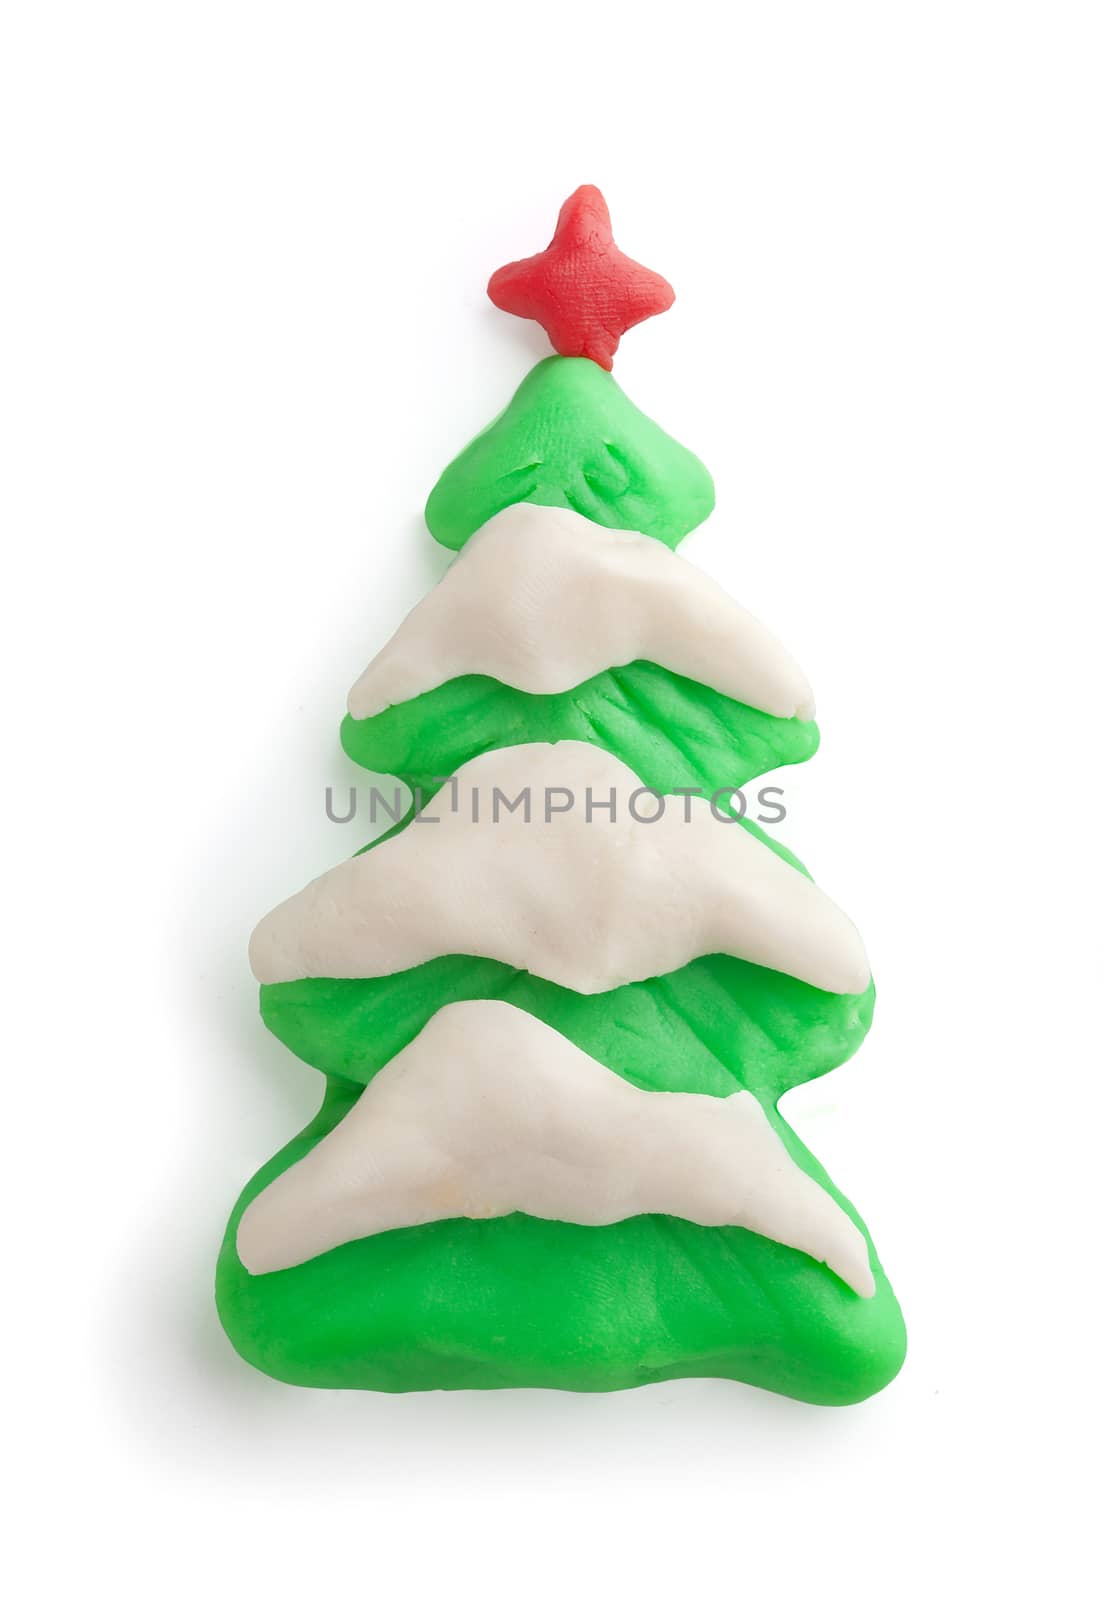 Plasticine christmass tree by Angorius